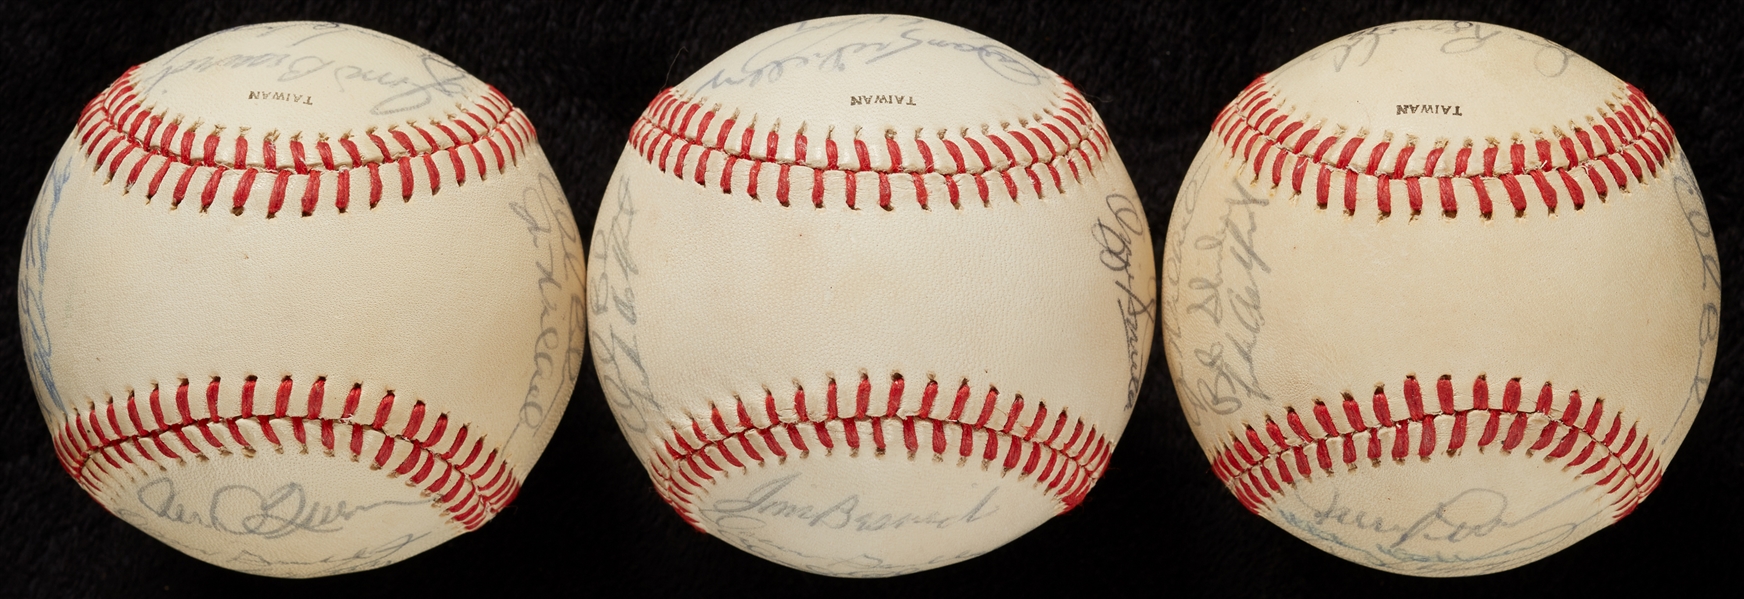 1978 San Diego Padres Team-Signed Baseballs (3)